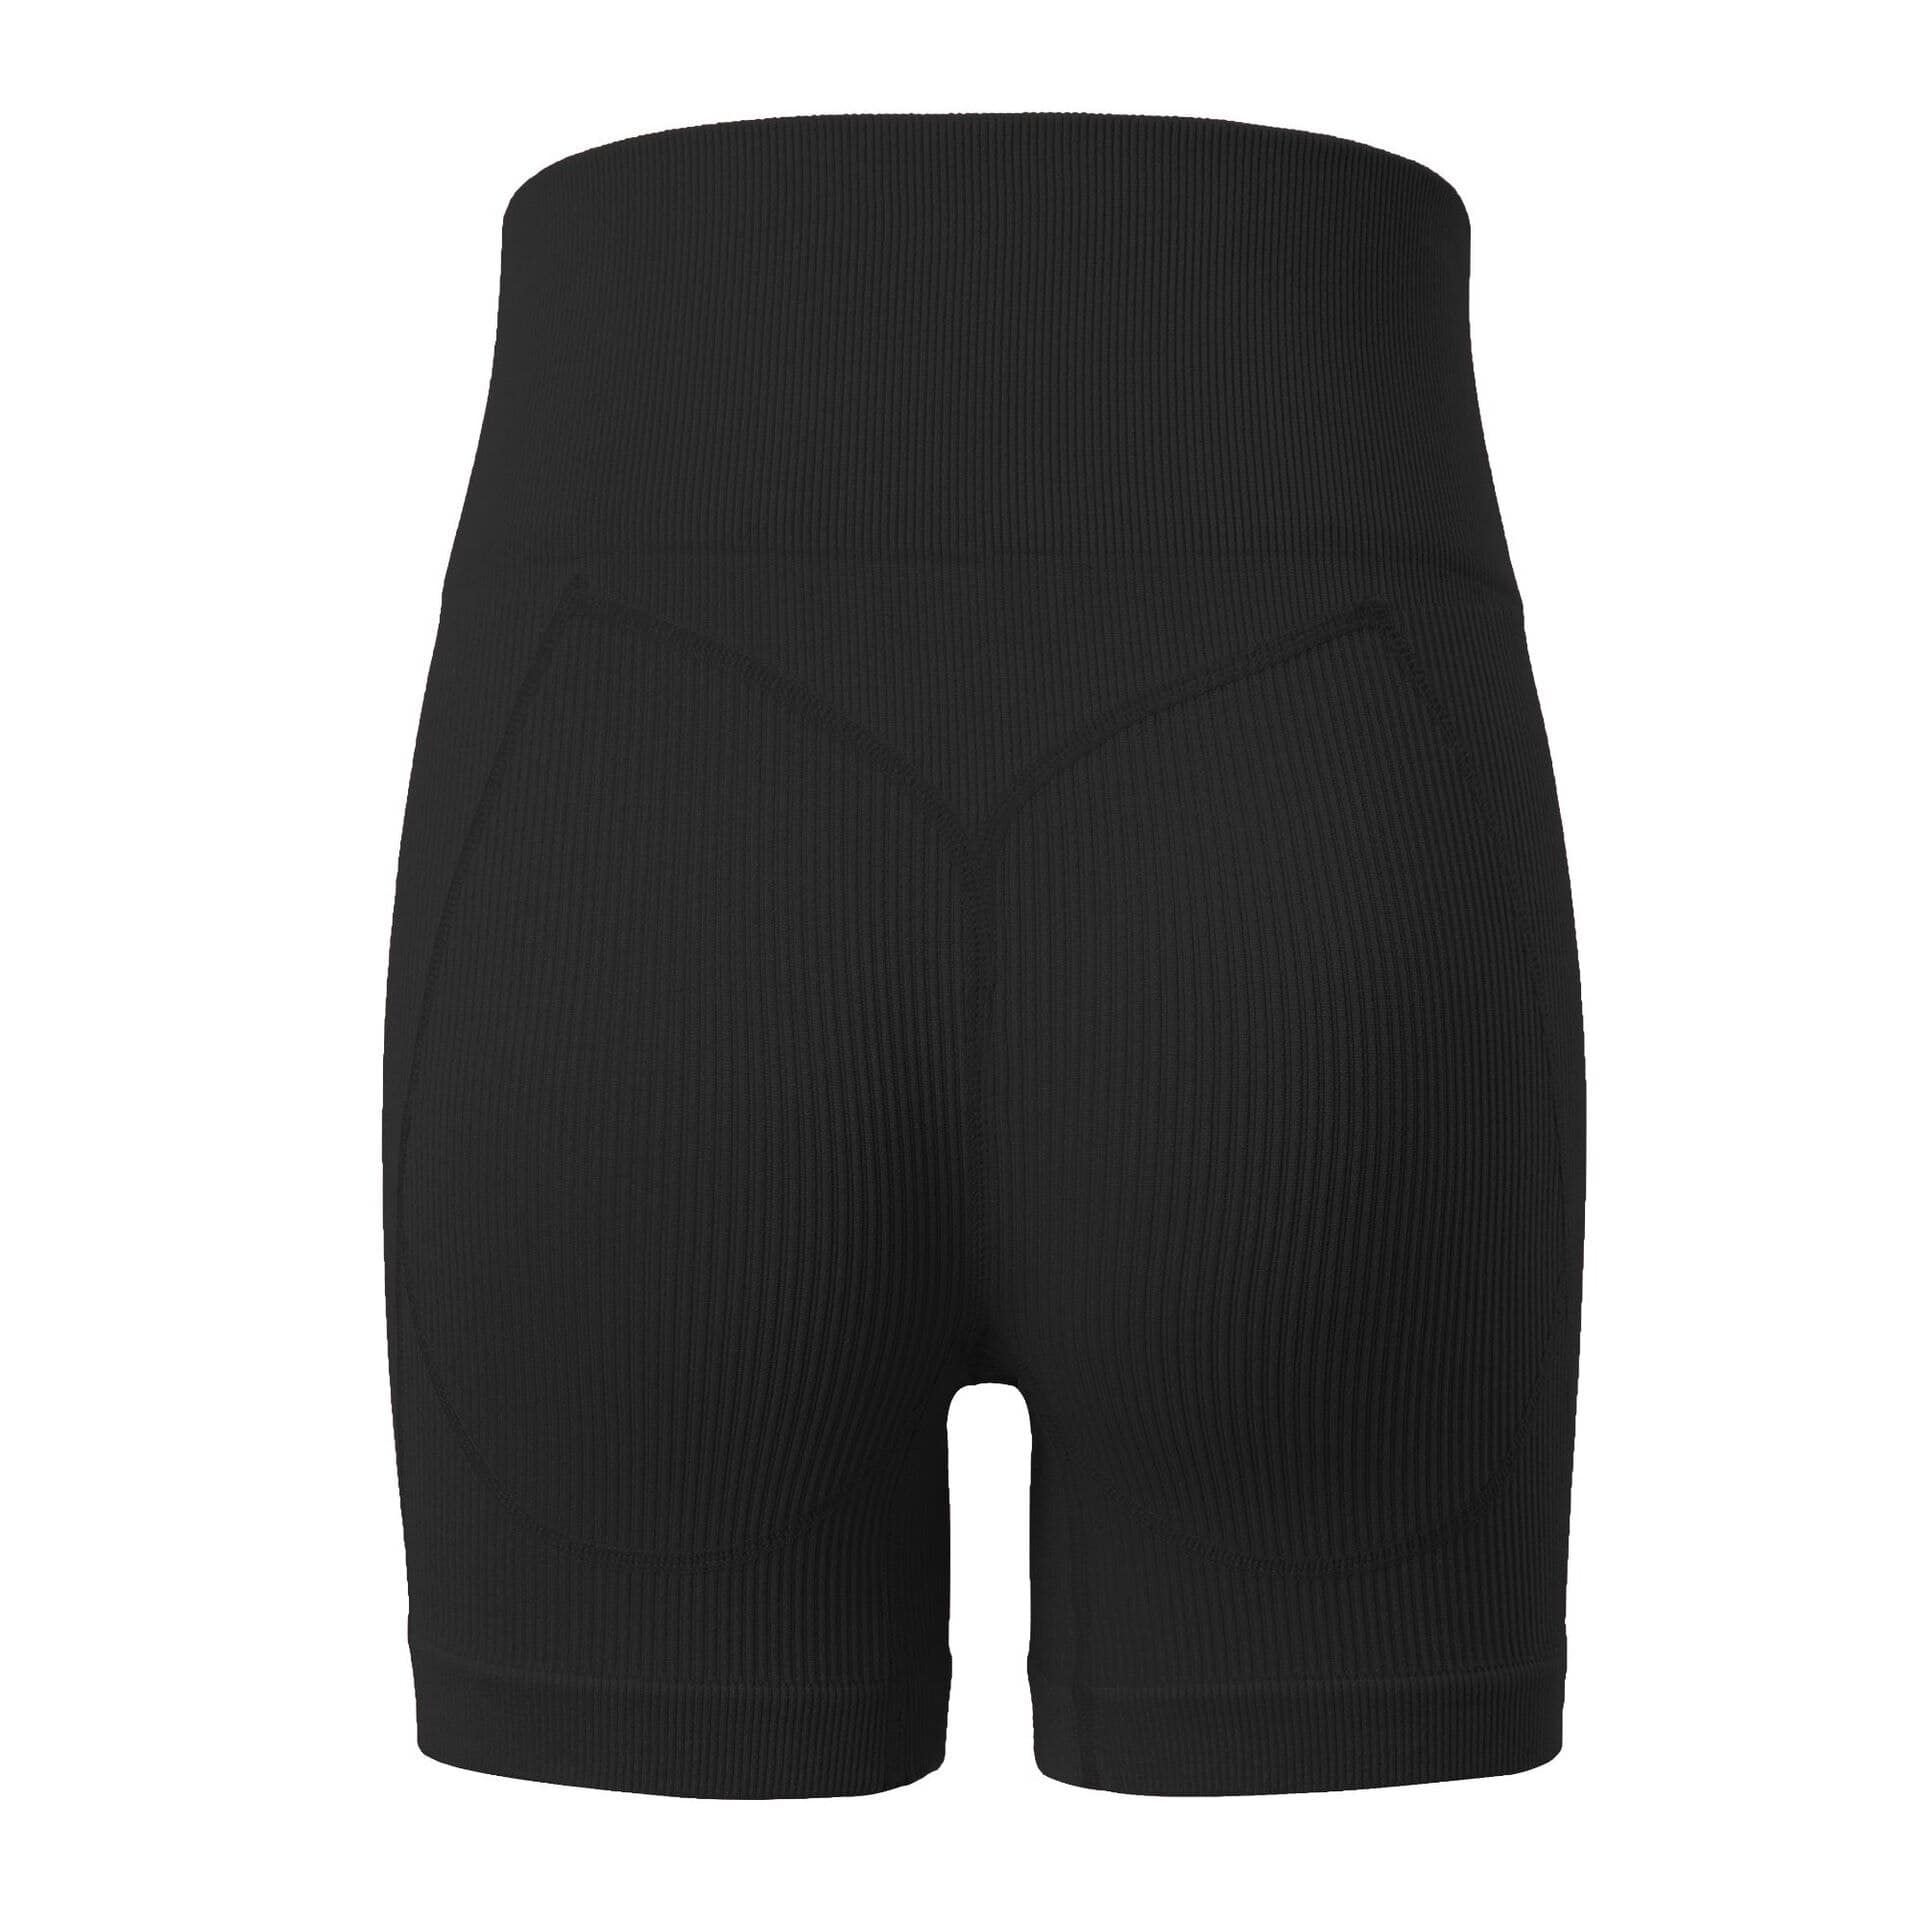 Female Ribbed Shorts Solid Color Short Pants Biker Shorts High Elastic Short Leggings Quick Dry Short Pants Athletic Yoga Shorts